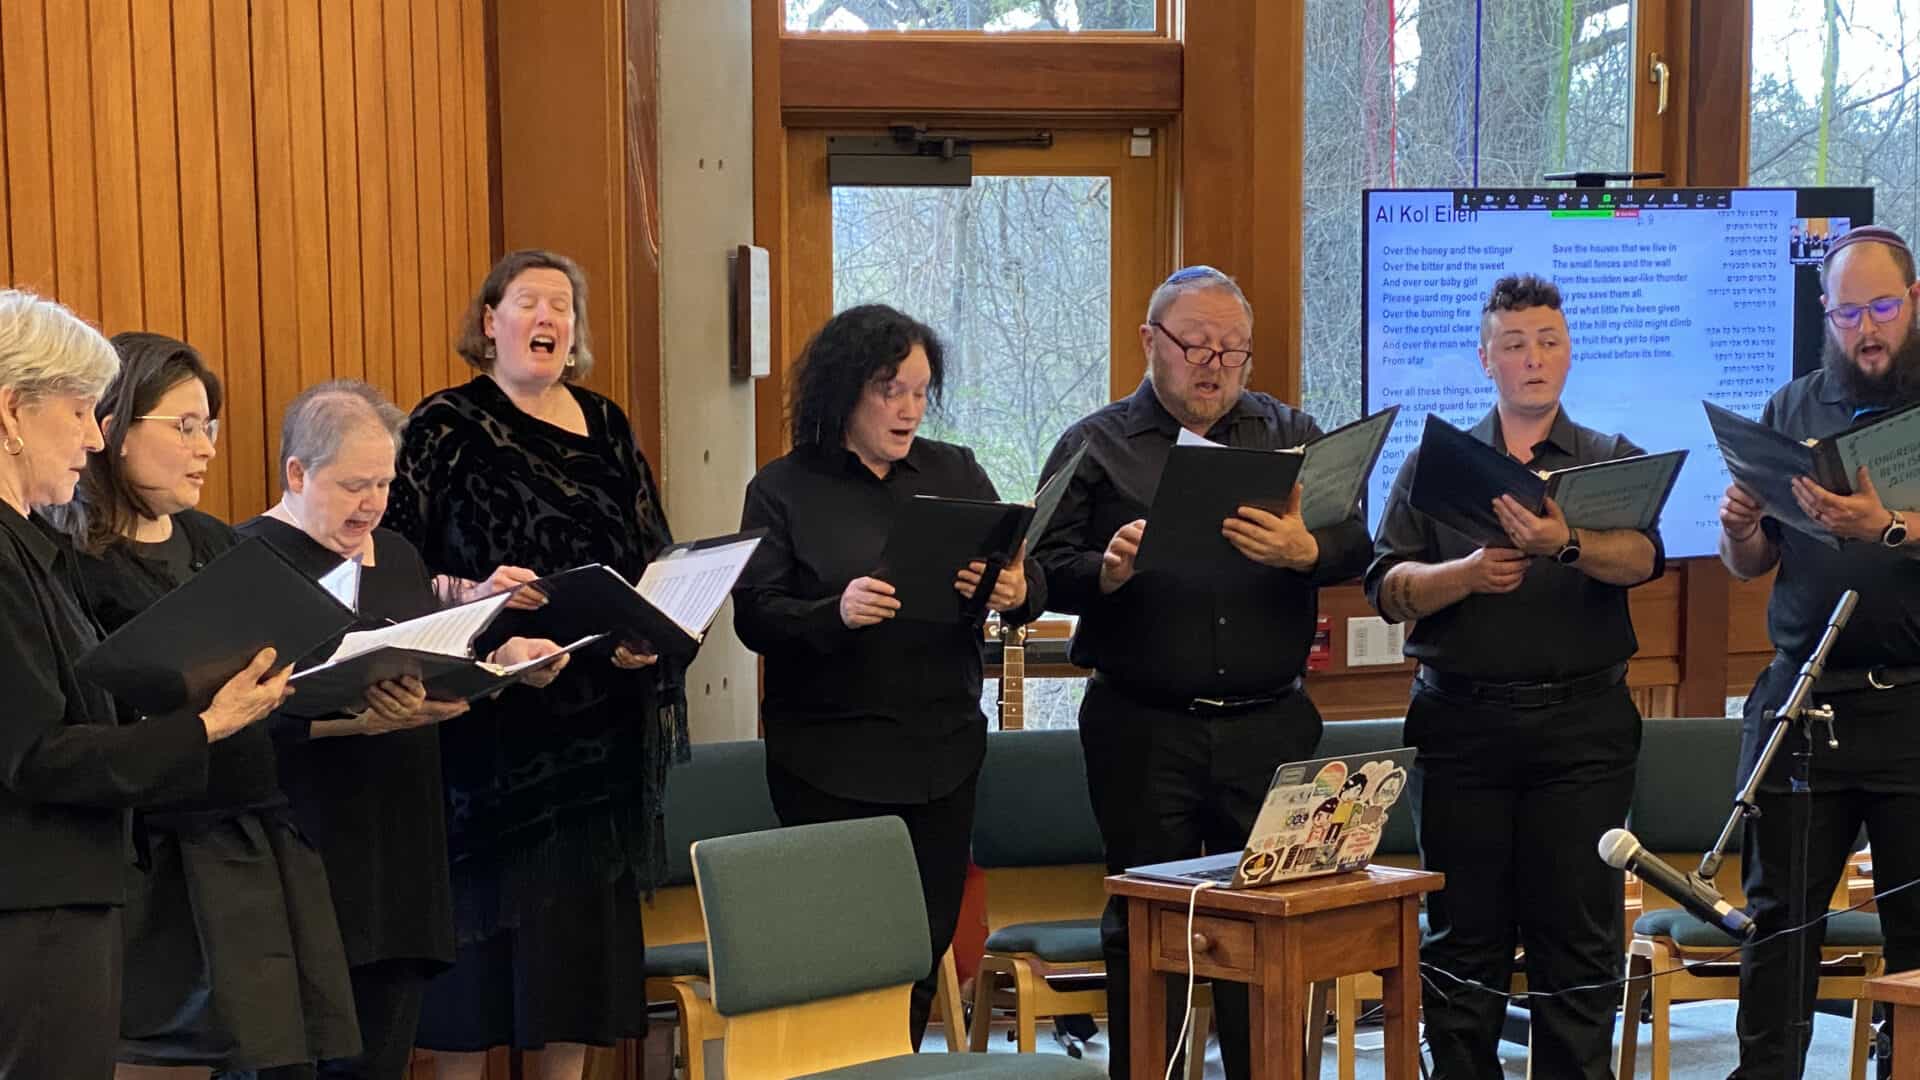 The Congrebation Beth Israel choir sings to honor Yom HaShoah. Press photo courtesy of Len Radin